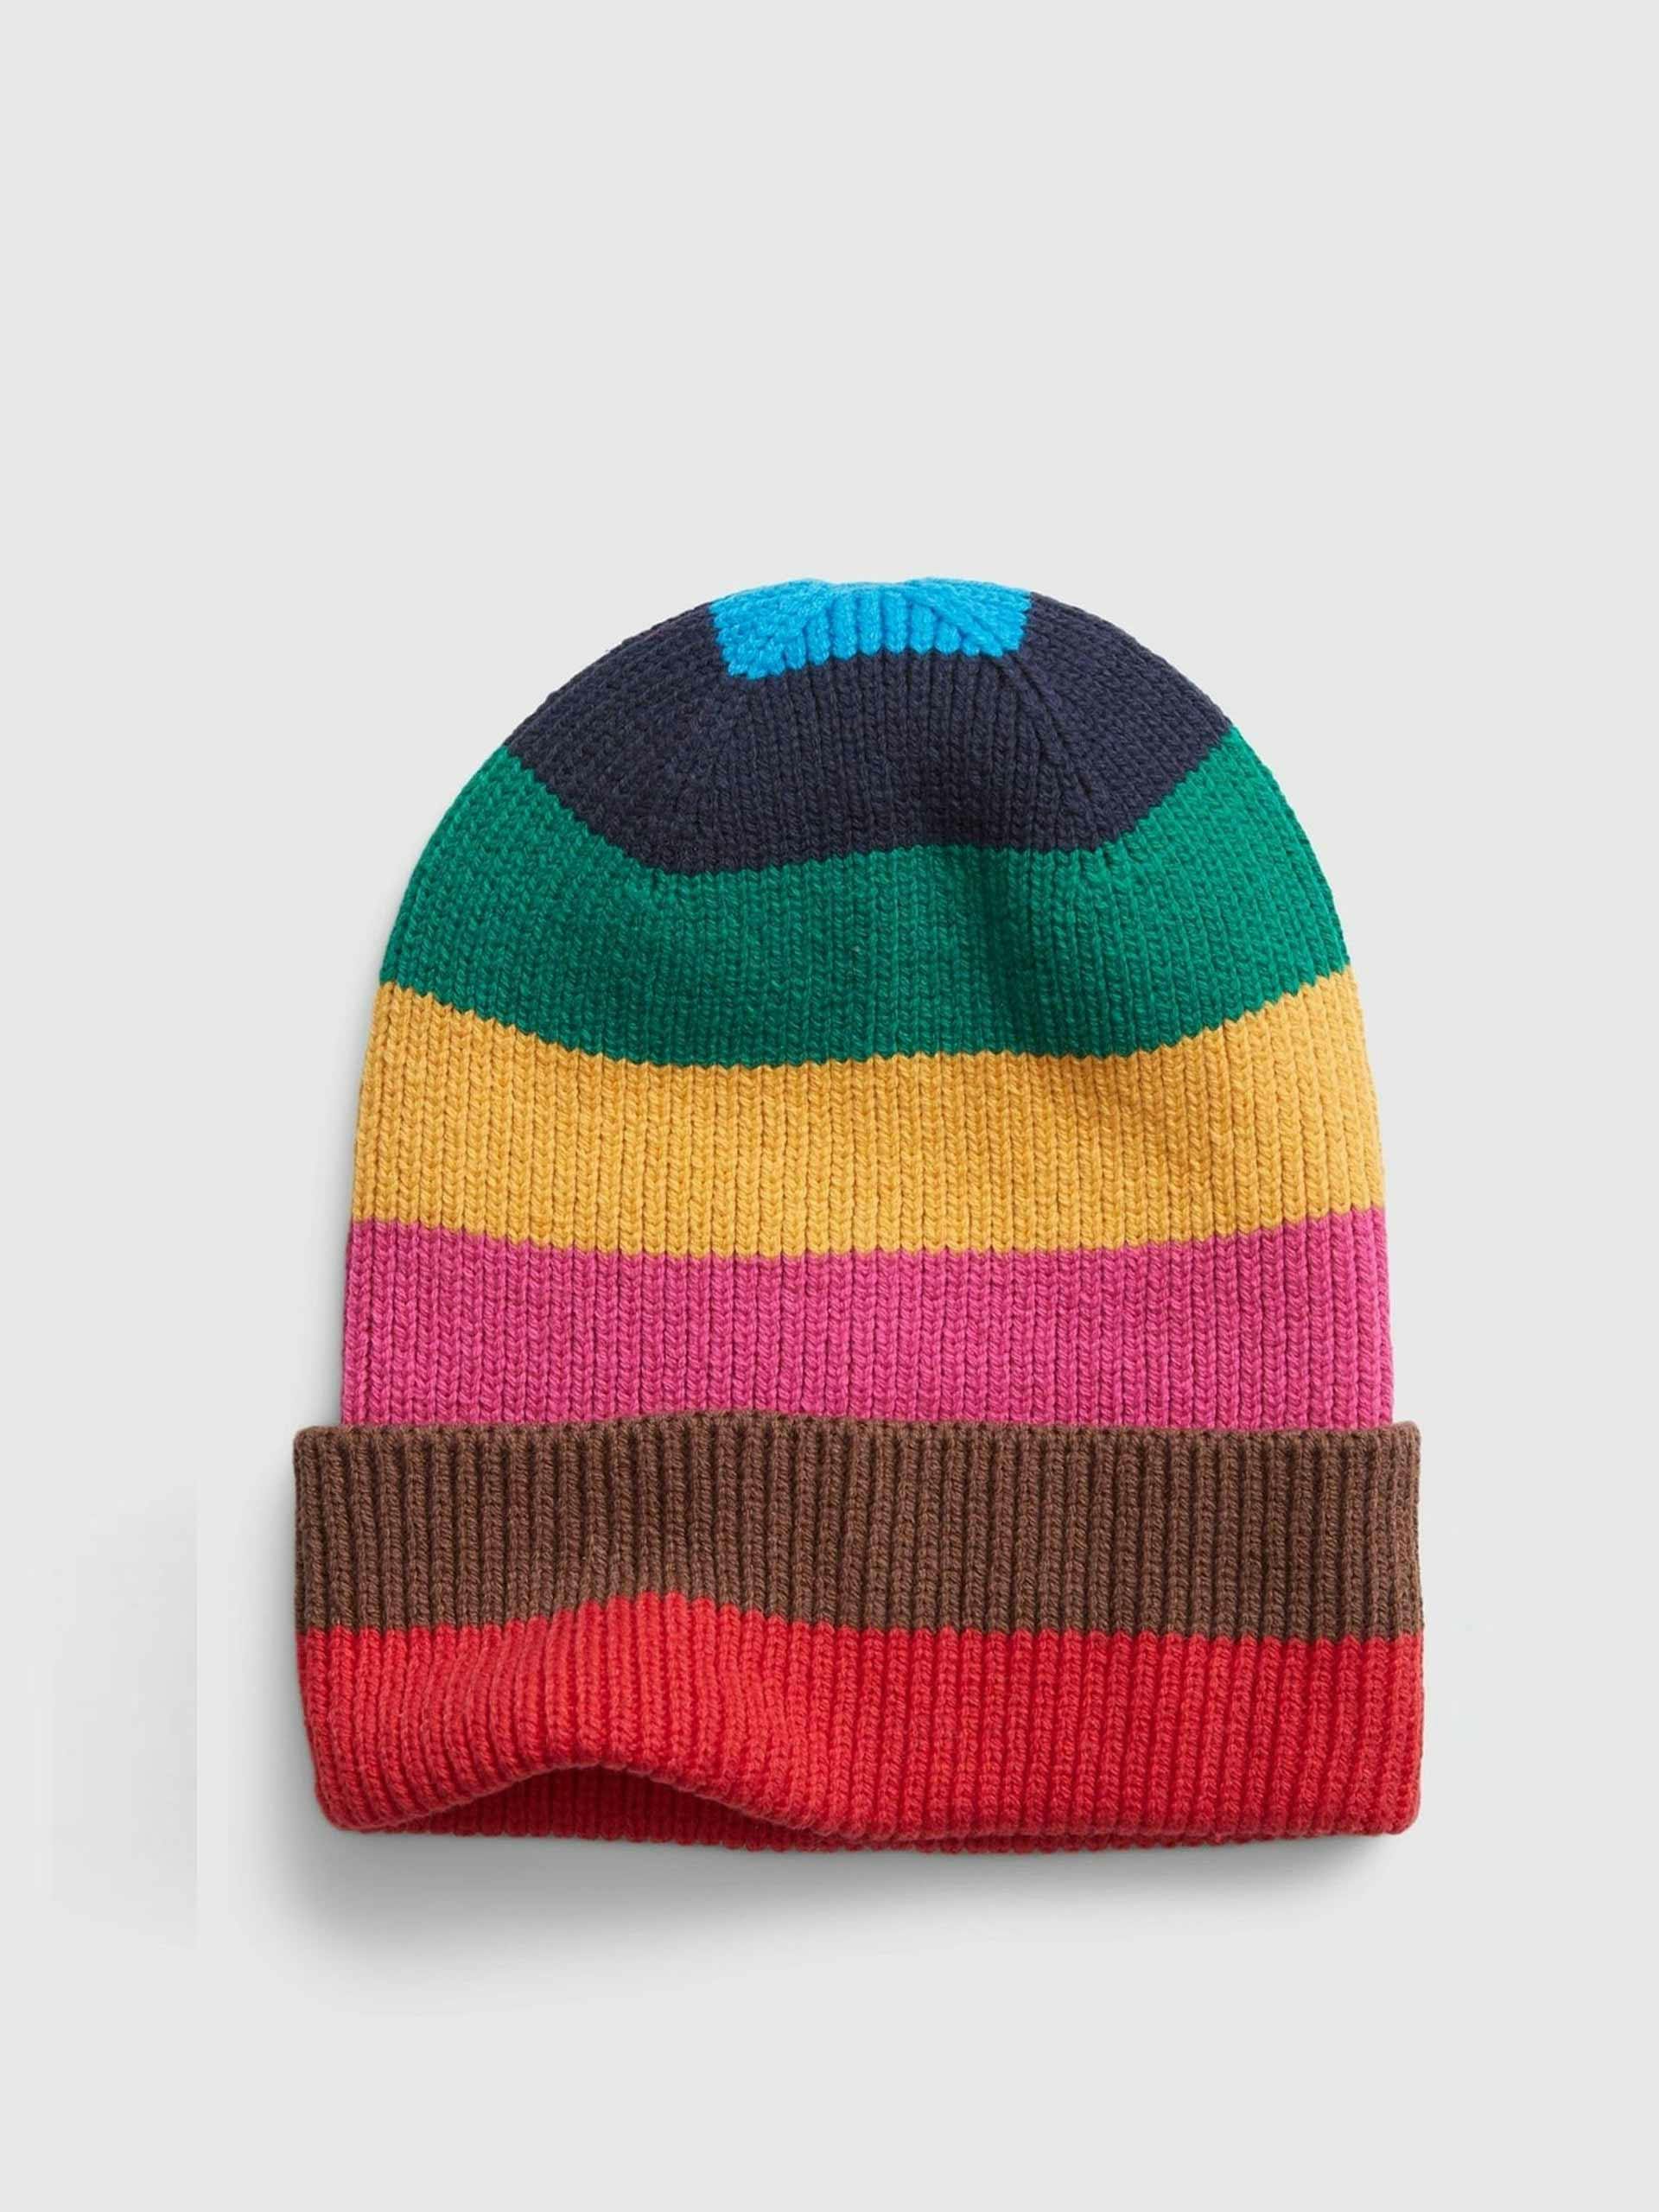 Multi-coloured striped beanie hat